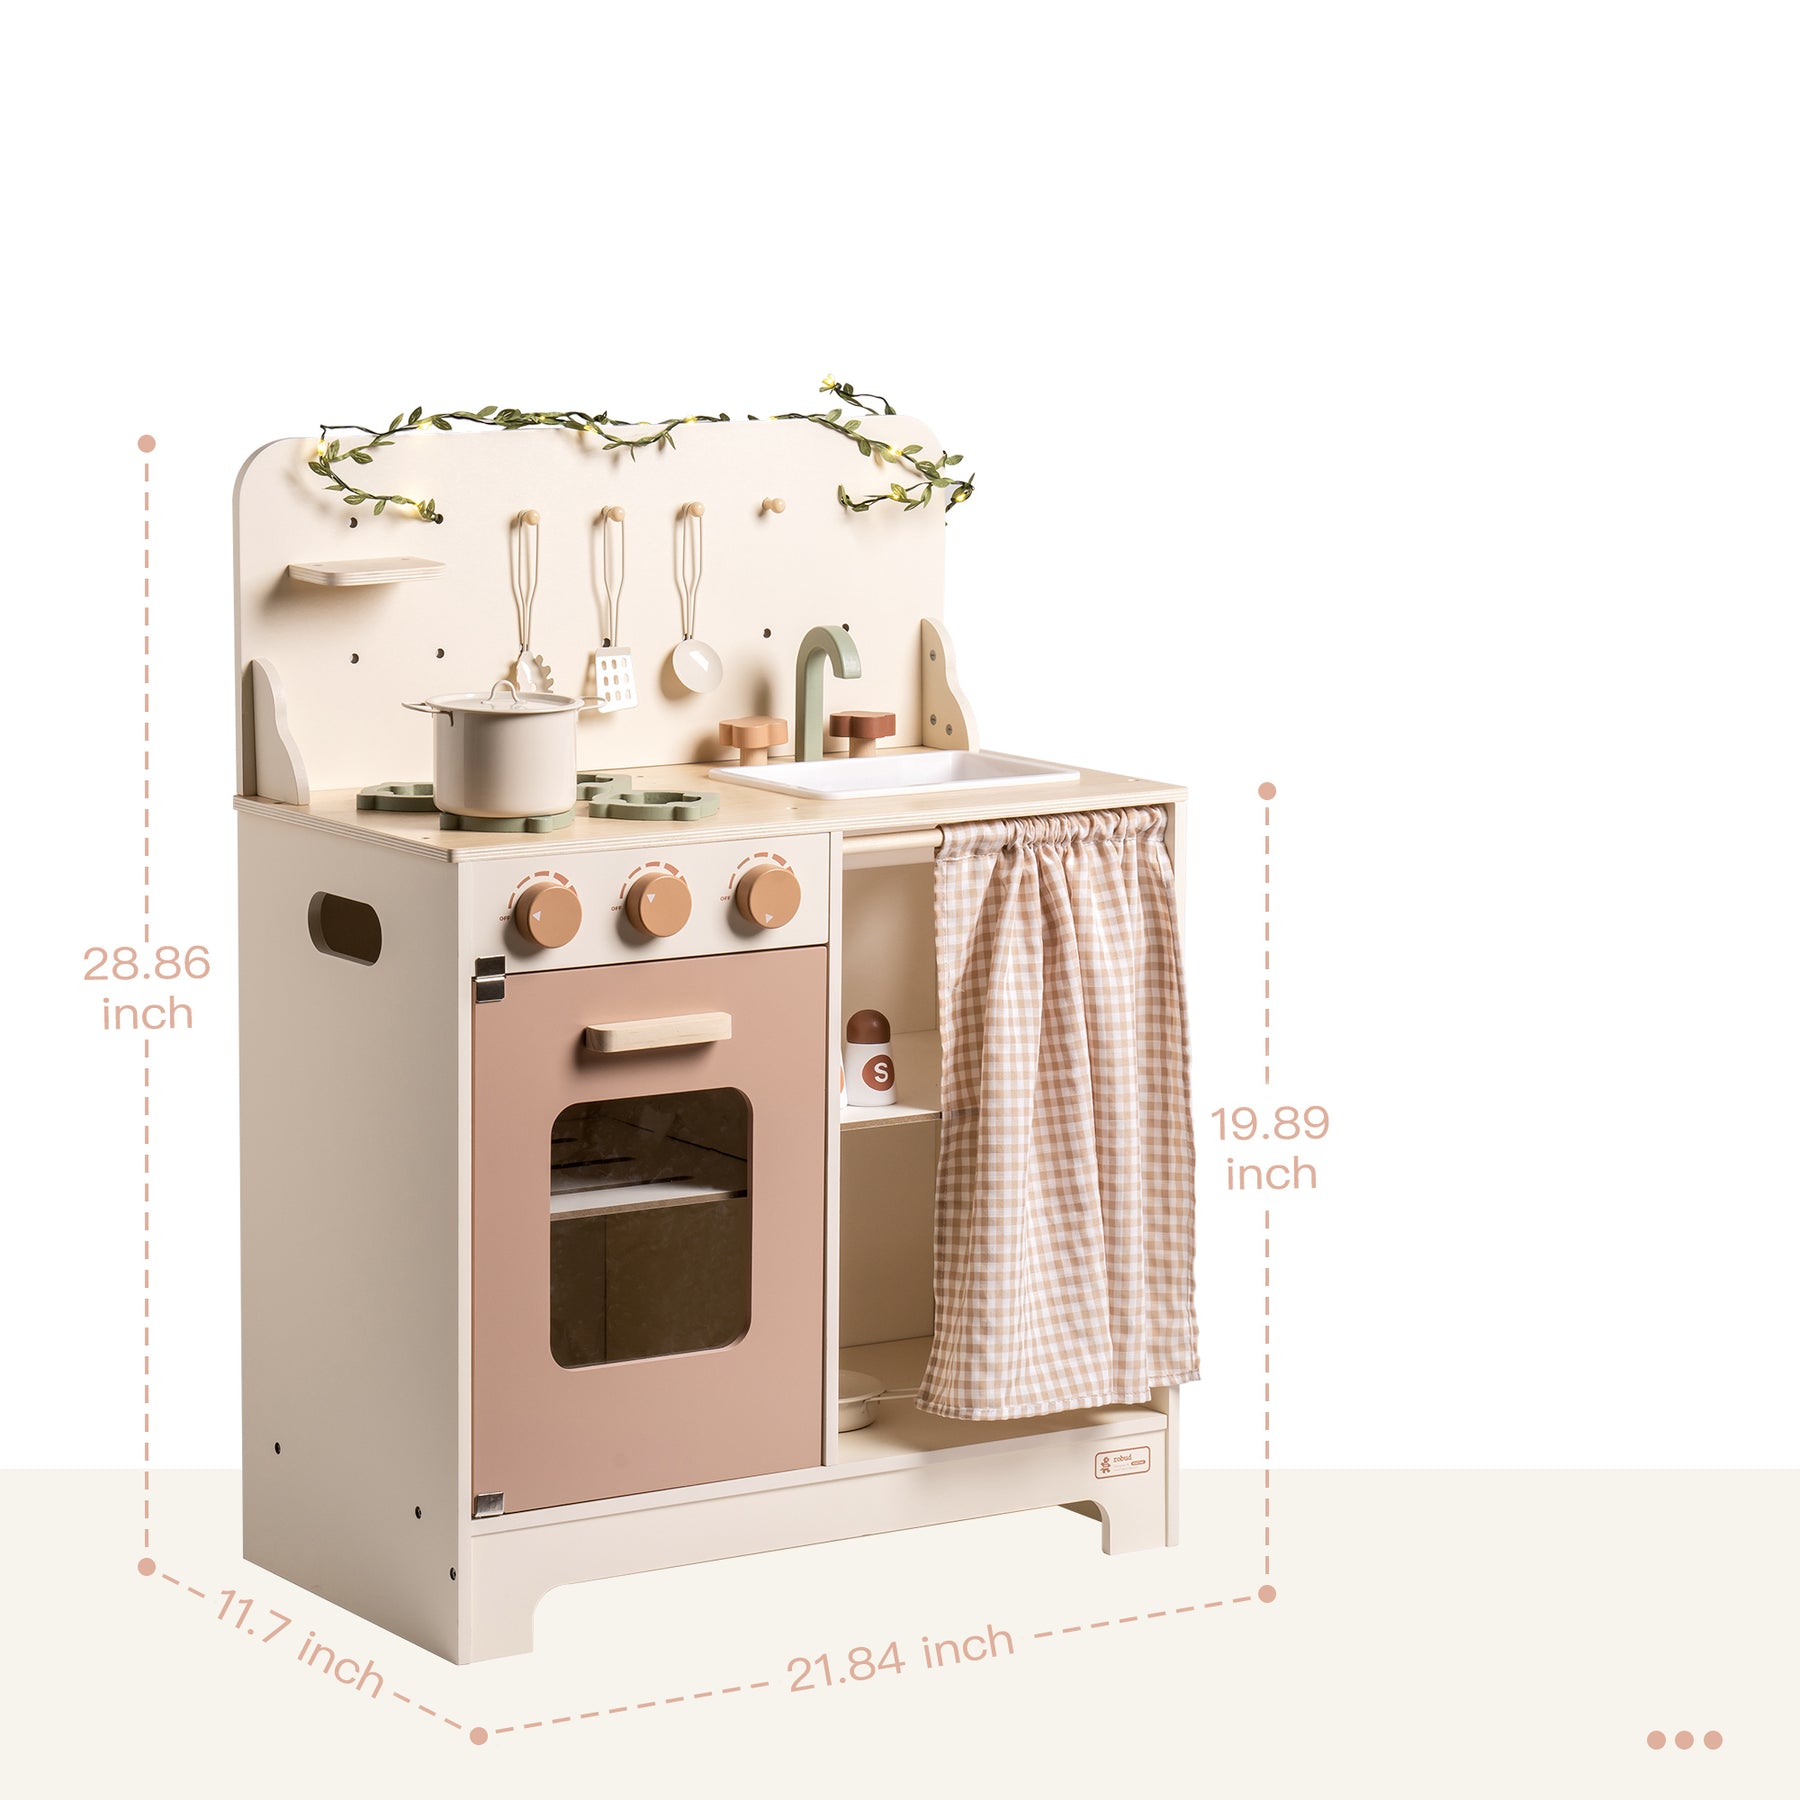 Stylish Cream Modern Kitchen Playset for Kids, Great Gift for Boys&Girls - Tonkn